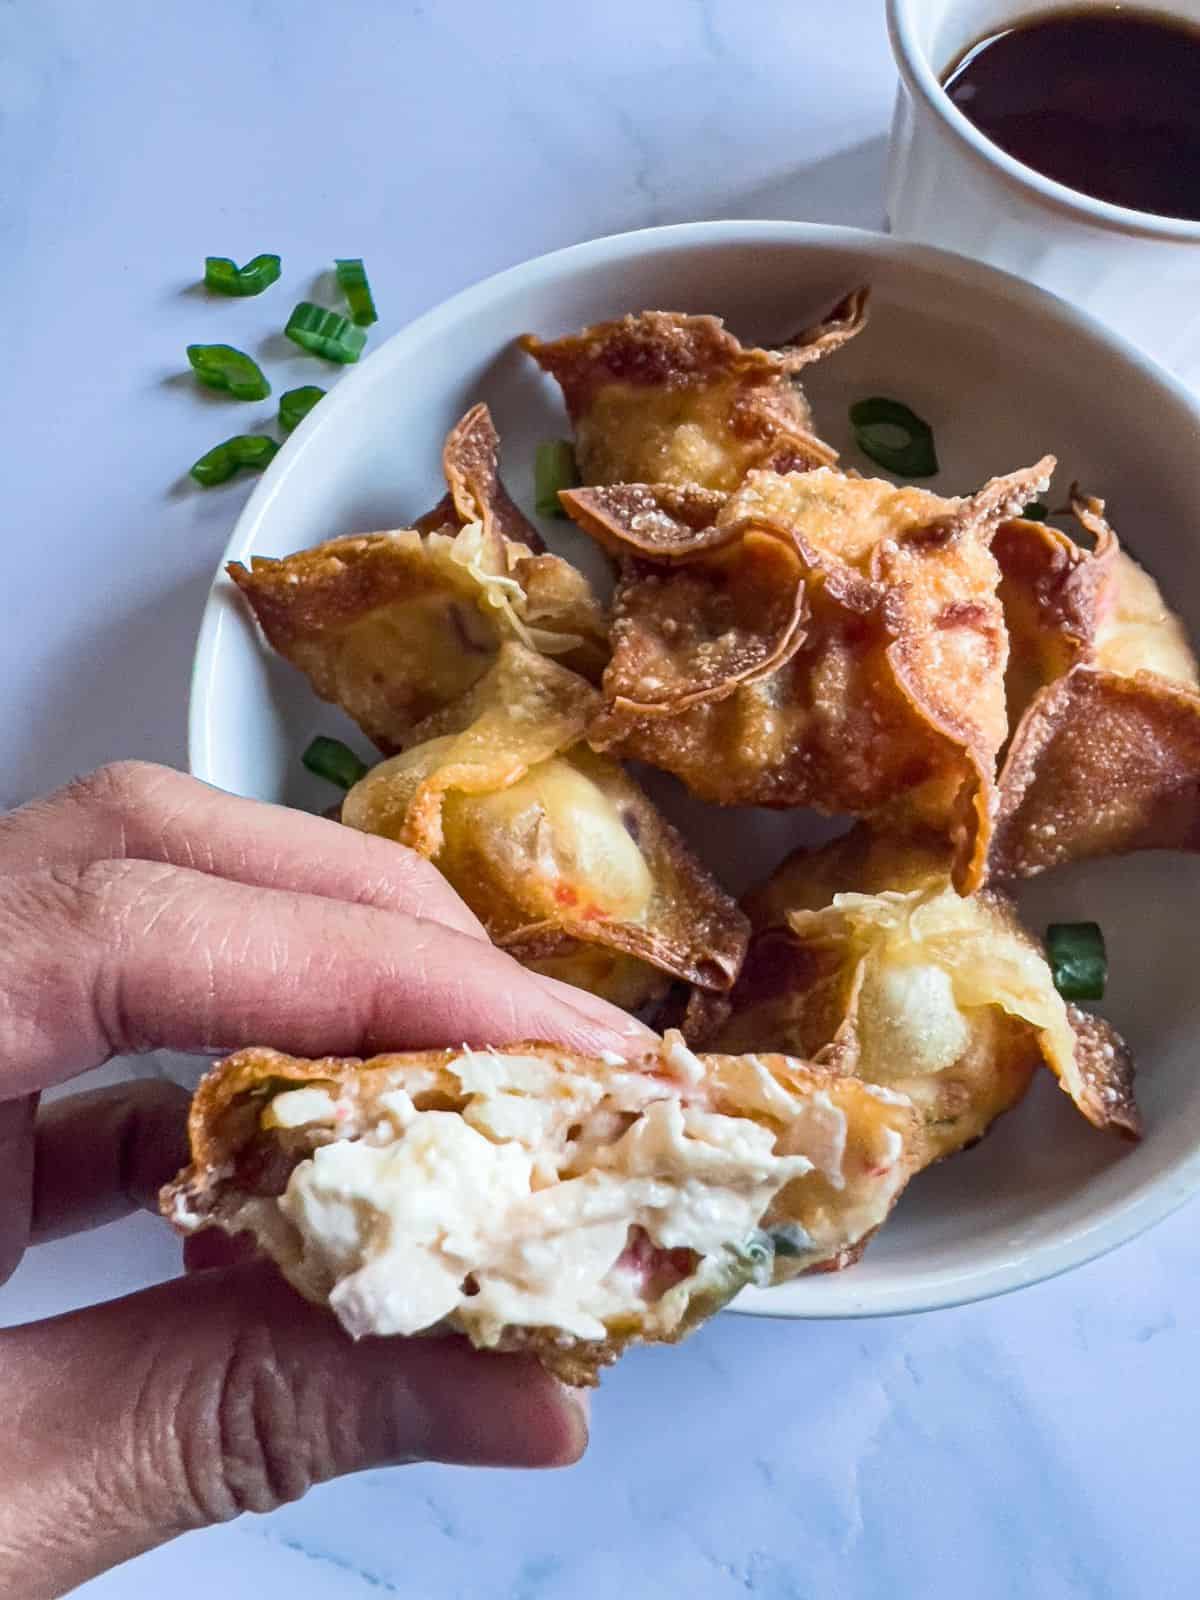 Finish dish of crispy crab rangoon with a bite.